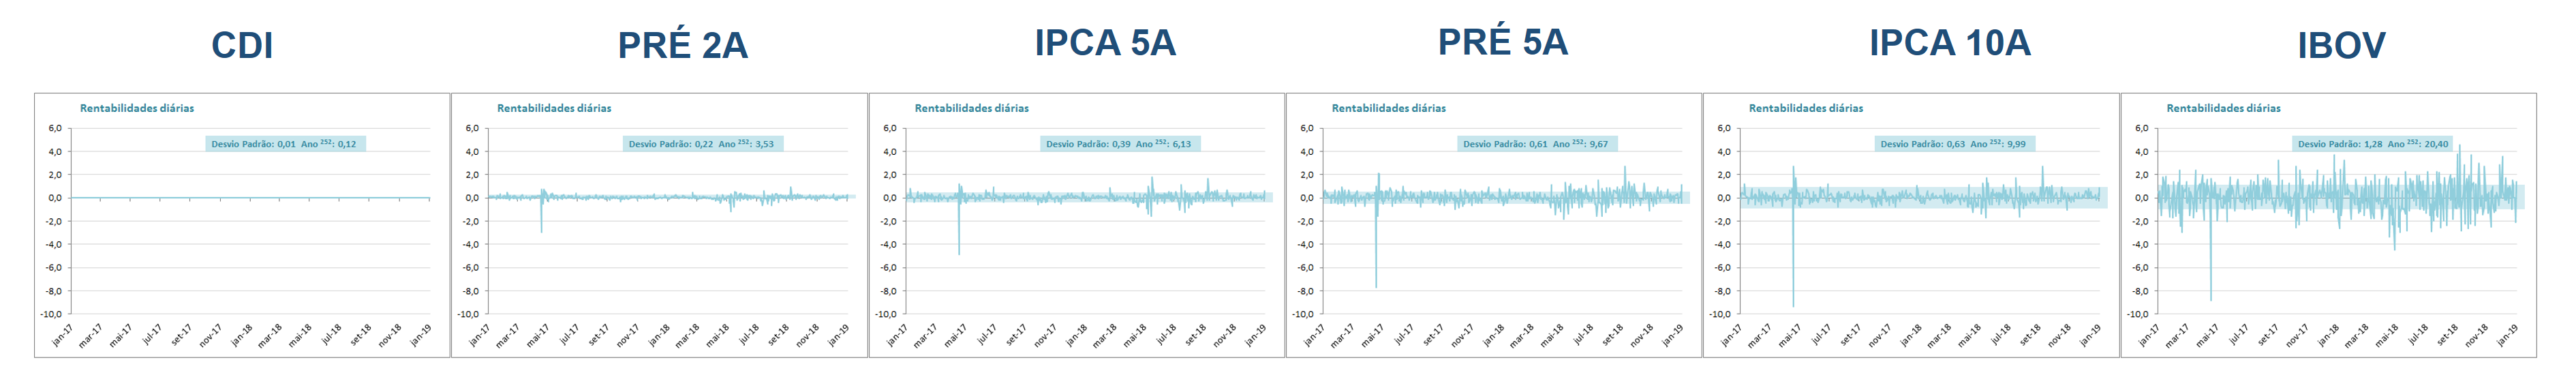 Volatilidade anualizada 21 dias úteis CDI Prefixado IPCA e Ibovespa vol 252